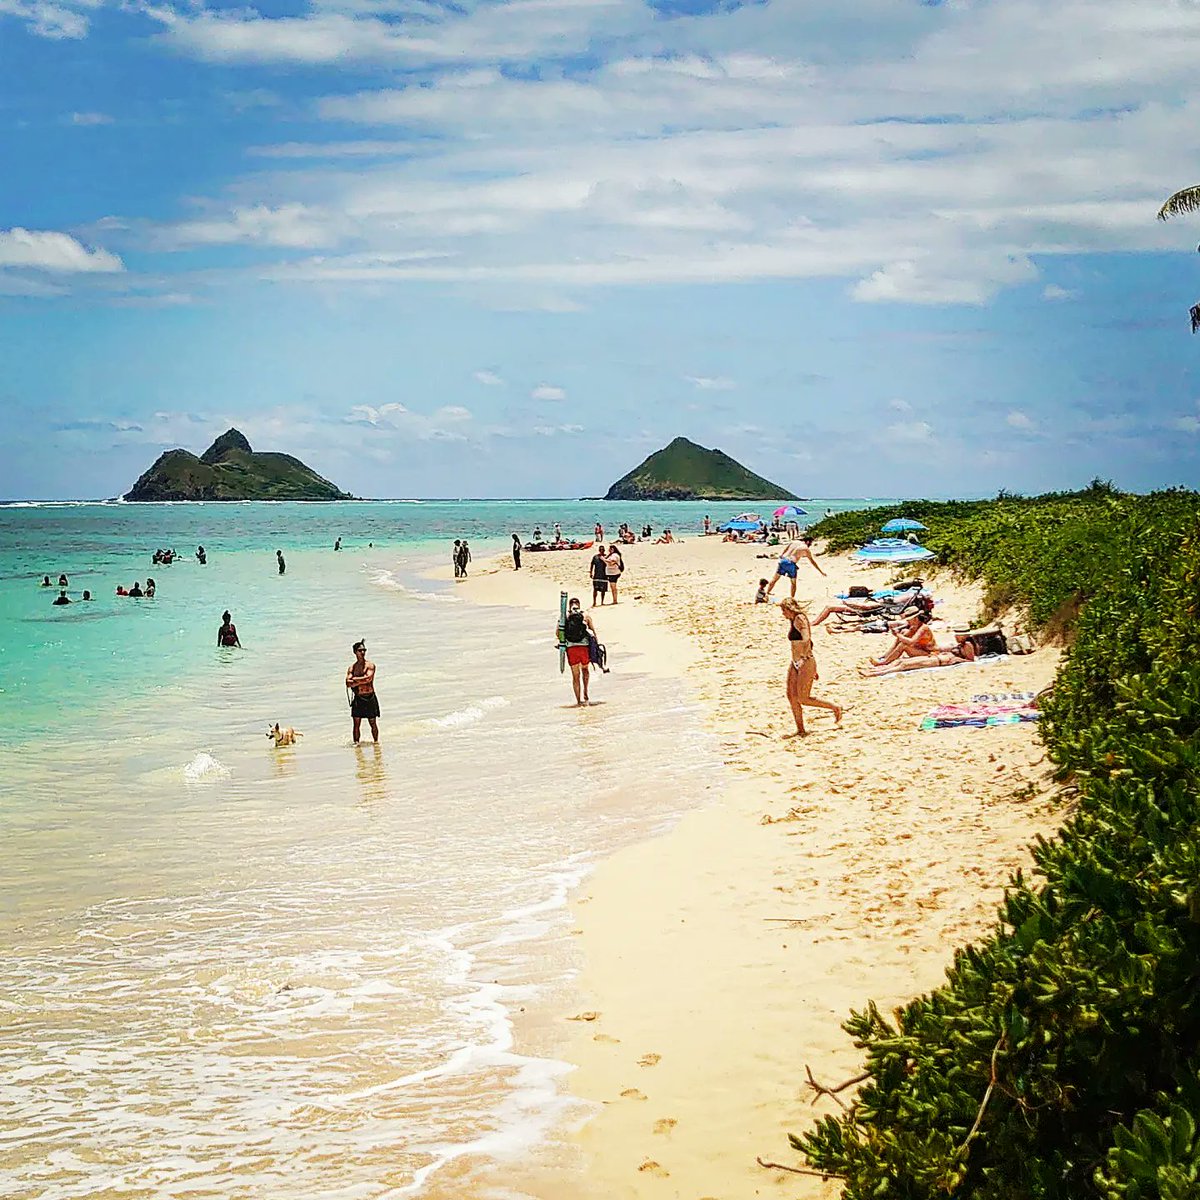 Beach days 🏖️
🗺📍
#kailua #oahu #hawaii #usa #pacific
📸
#lanikai
♯
#travel #99countries #adventure #beach #beachlife #visithawaii #Hawaiitag #lanikaibeach
👀
@gohawaii 🇺🇲